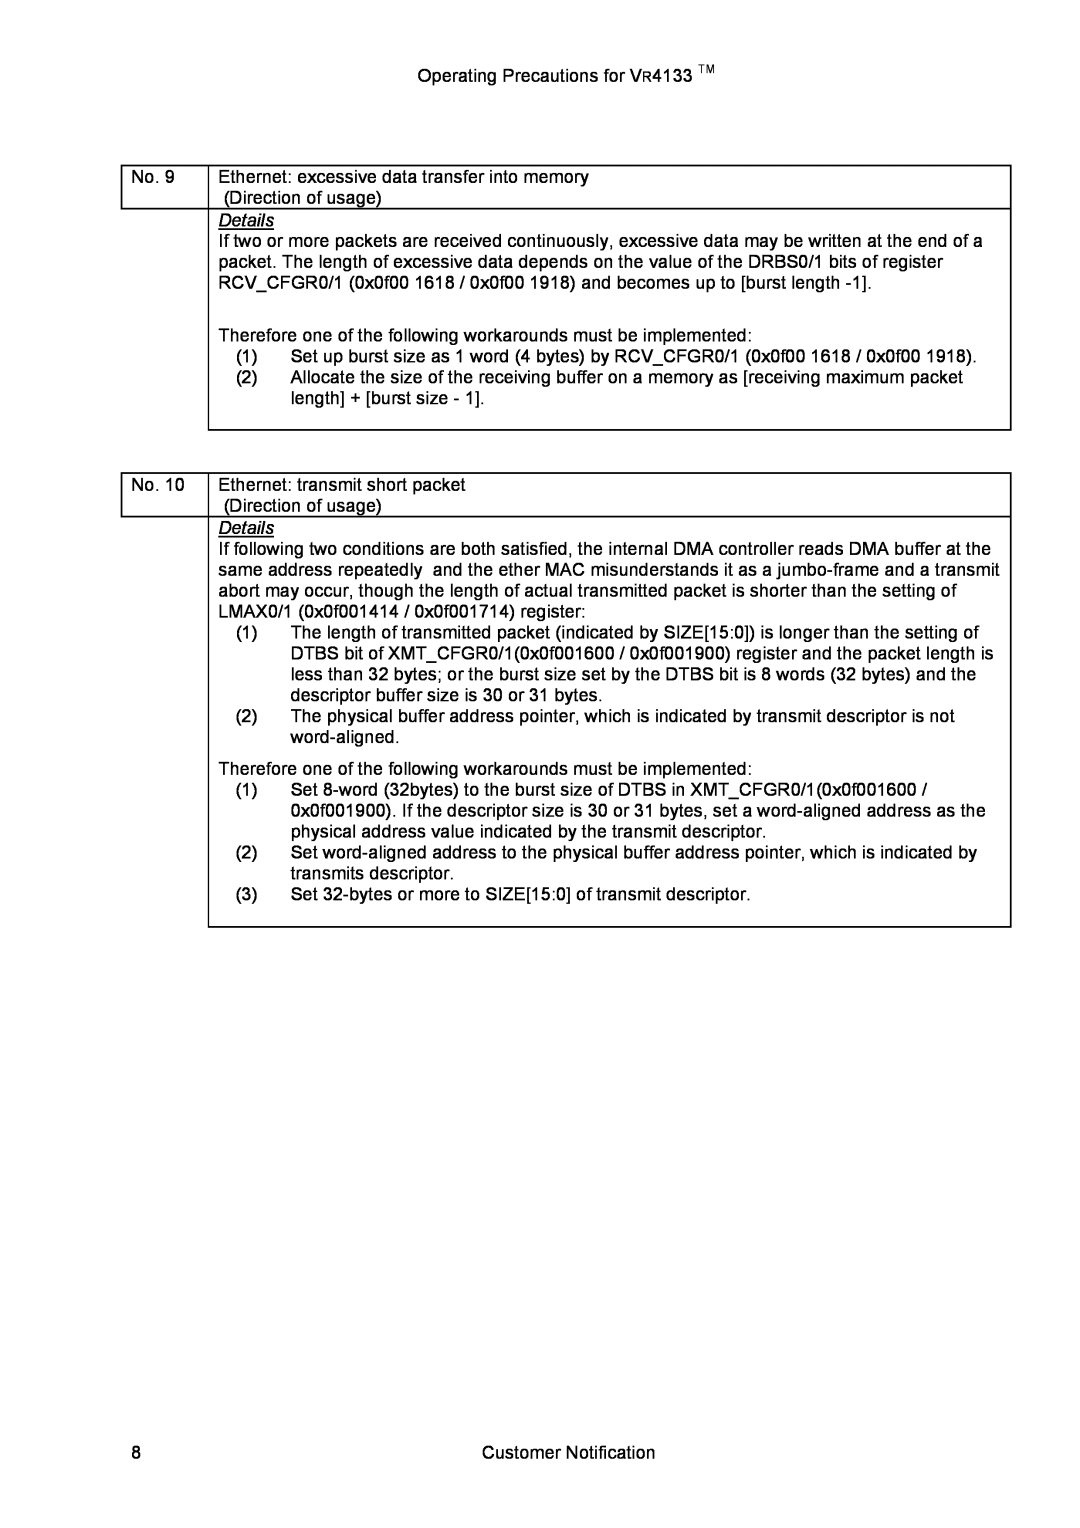 NEC manual Operating Precautions for VR4133 TM, Details 